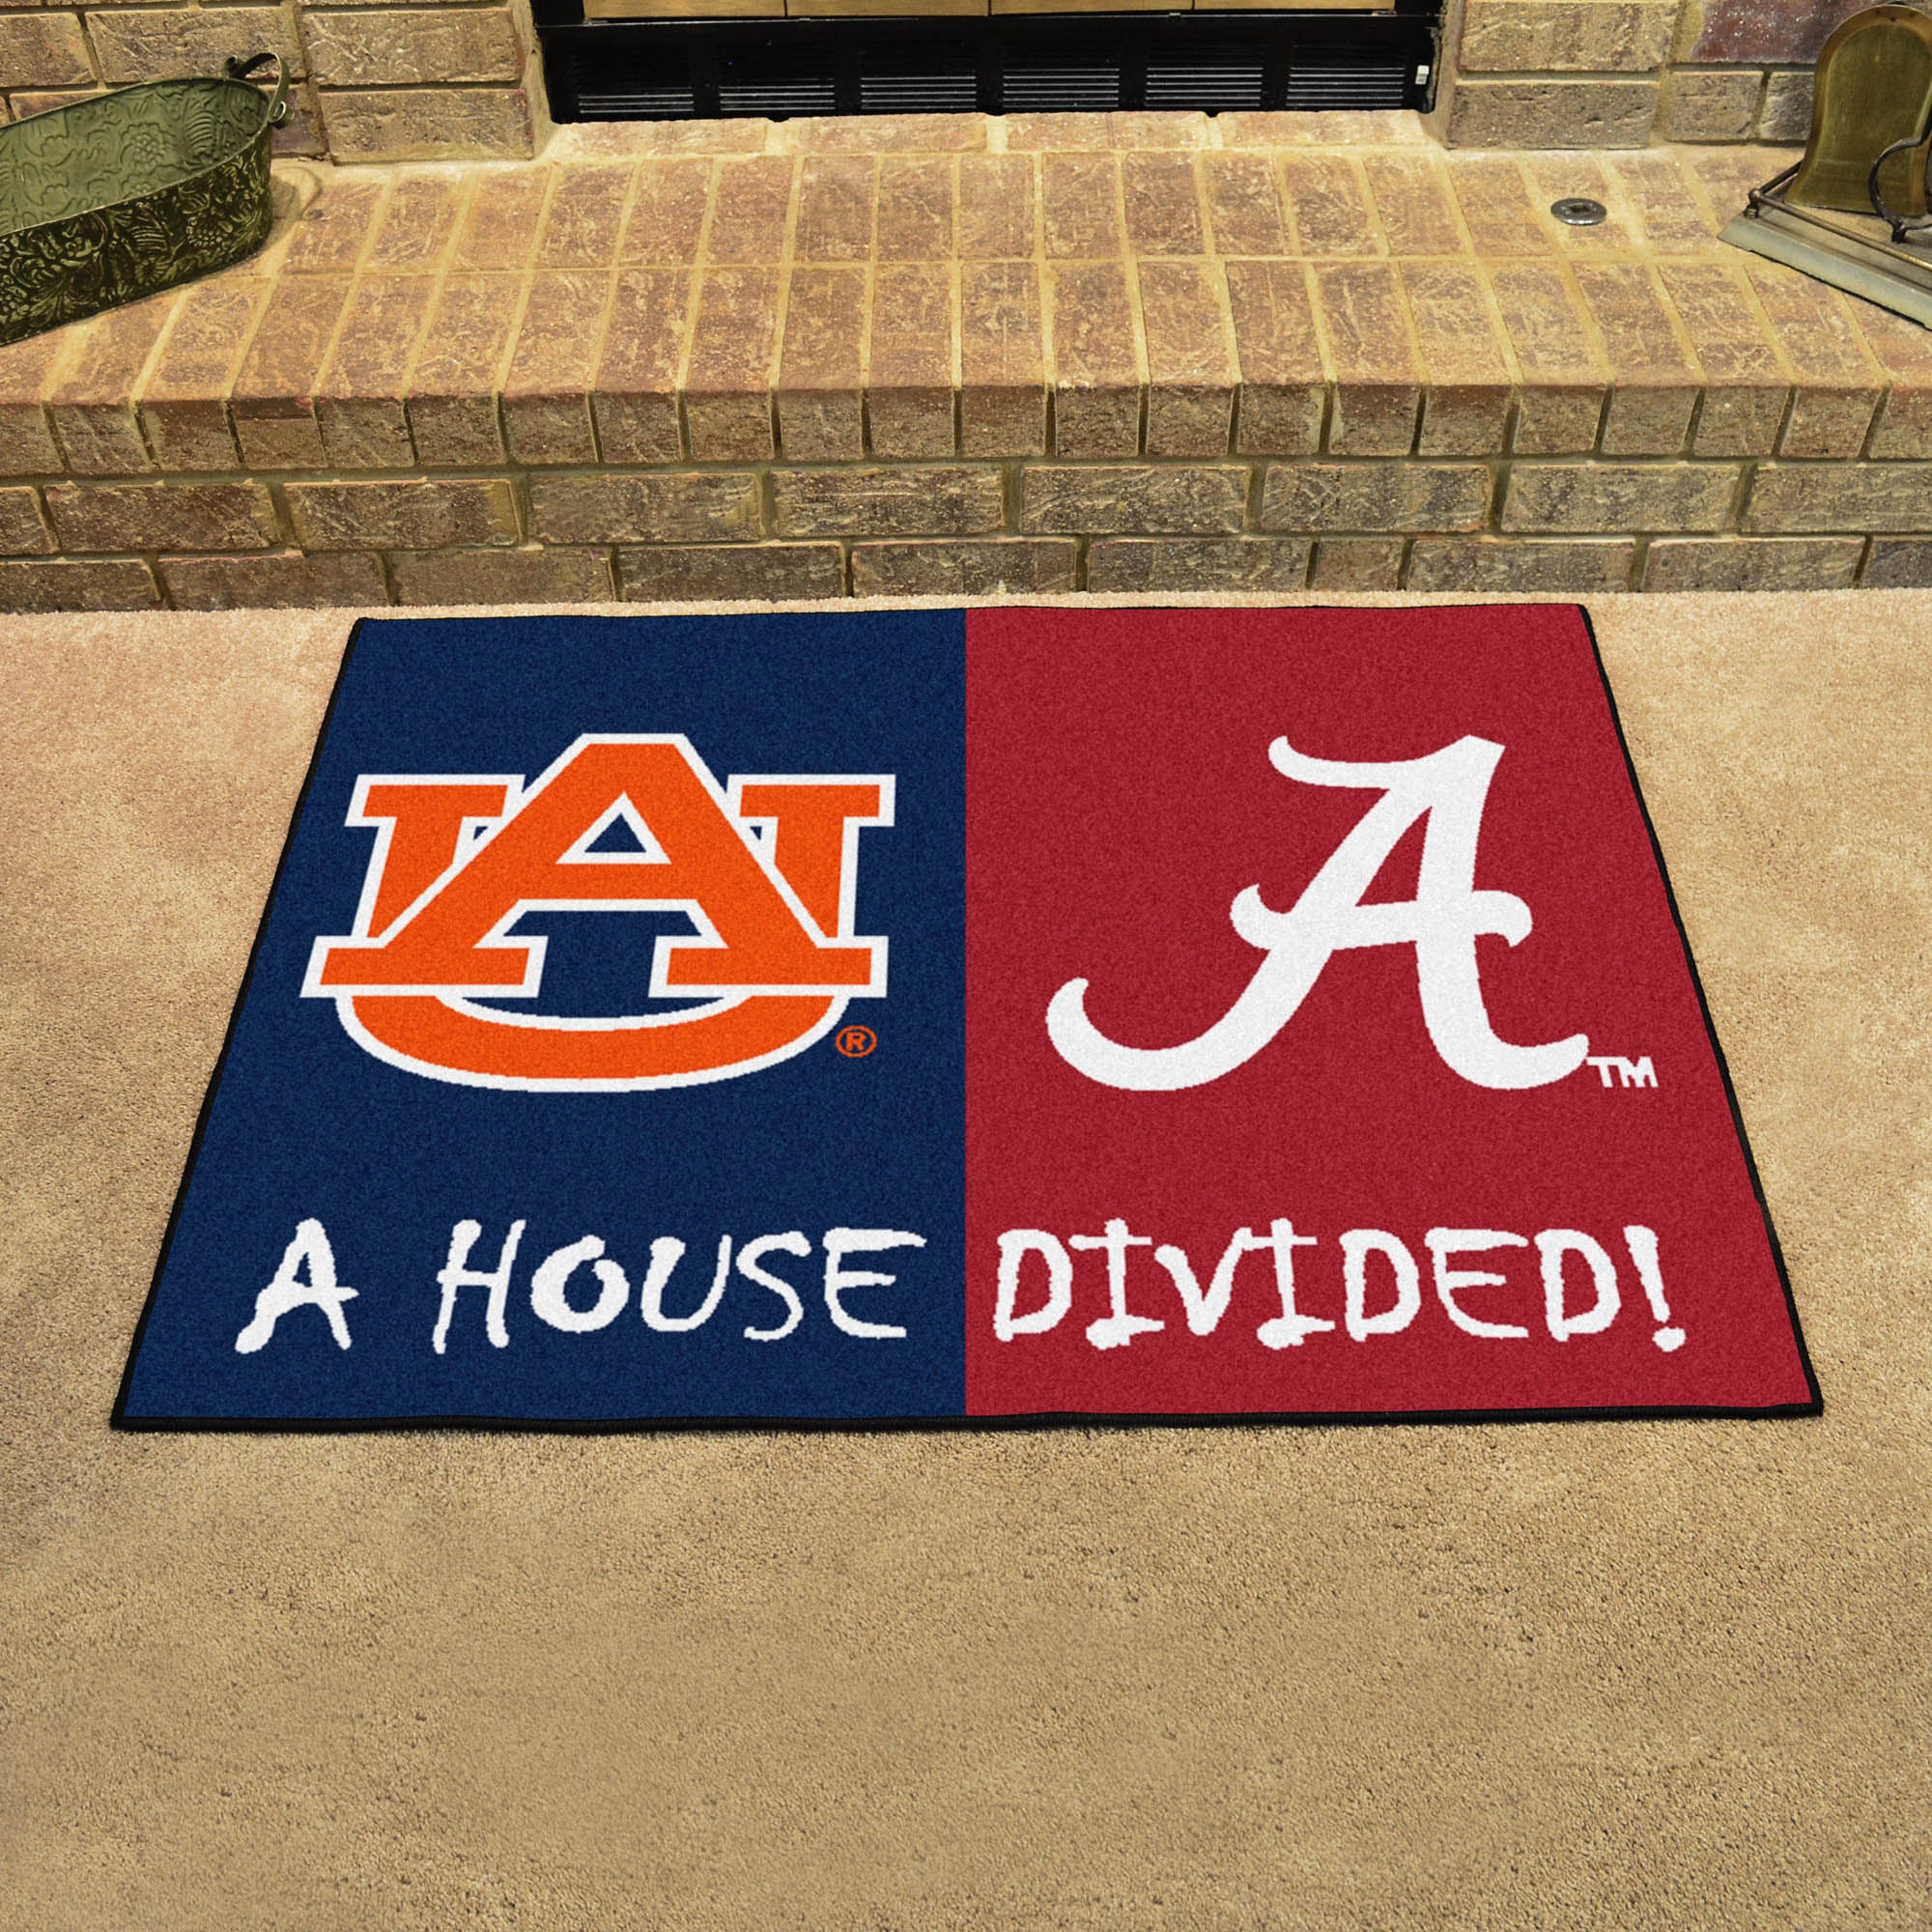 NCAA House Divided Rivalry Rug Alabama Crimson Tide - Auburn Tigers